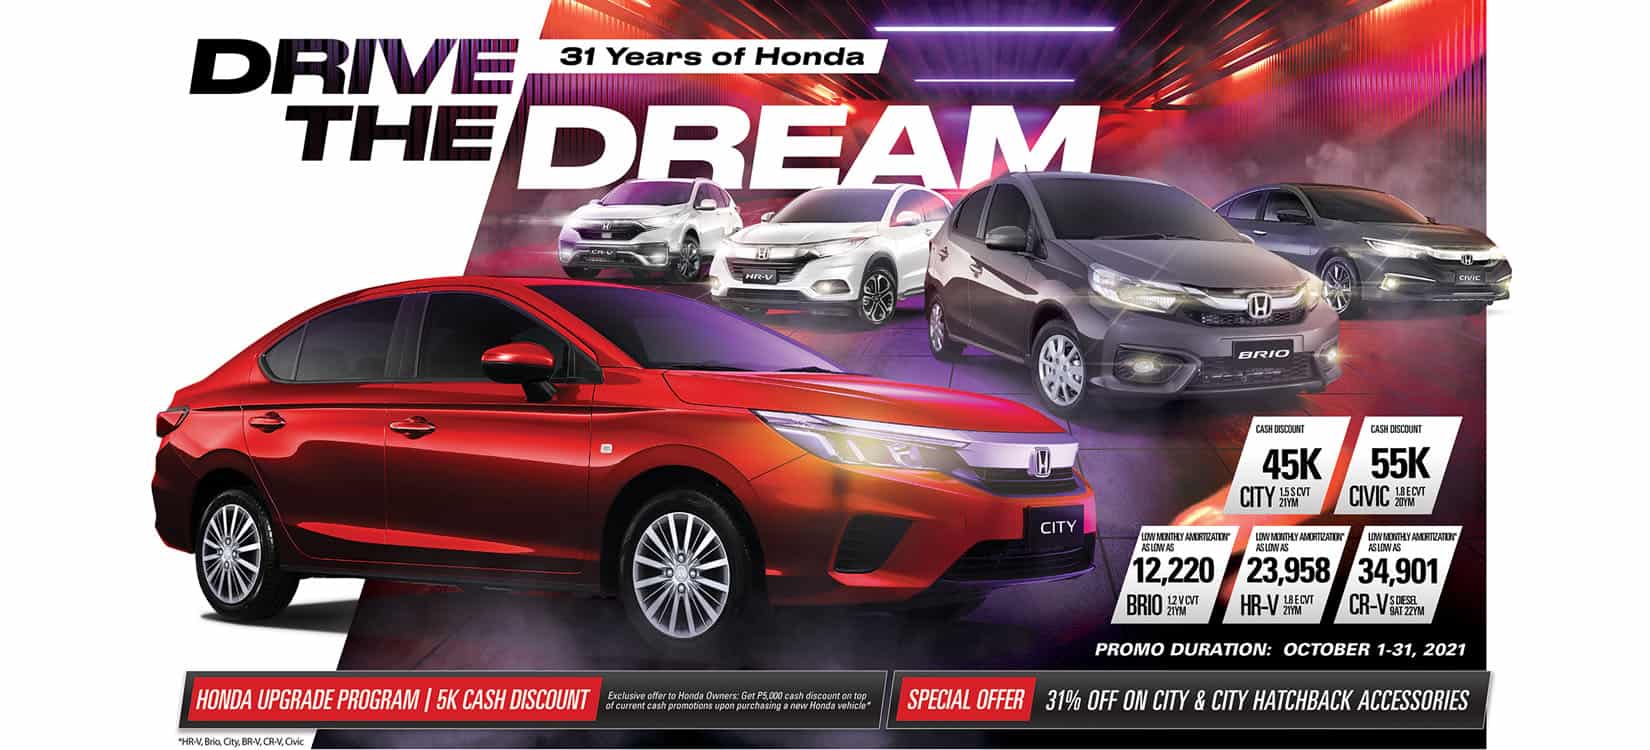 Honda celebrates its 31st anniversary with â€œDrive the Dreamâ€ promo this October